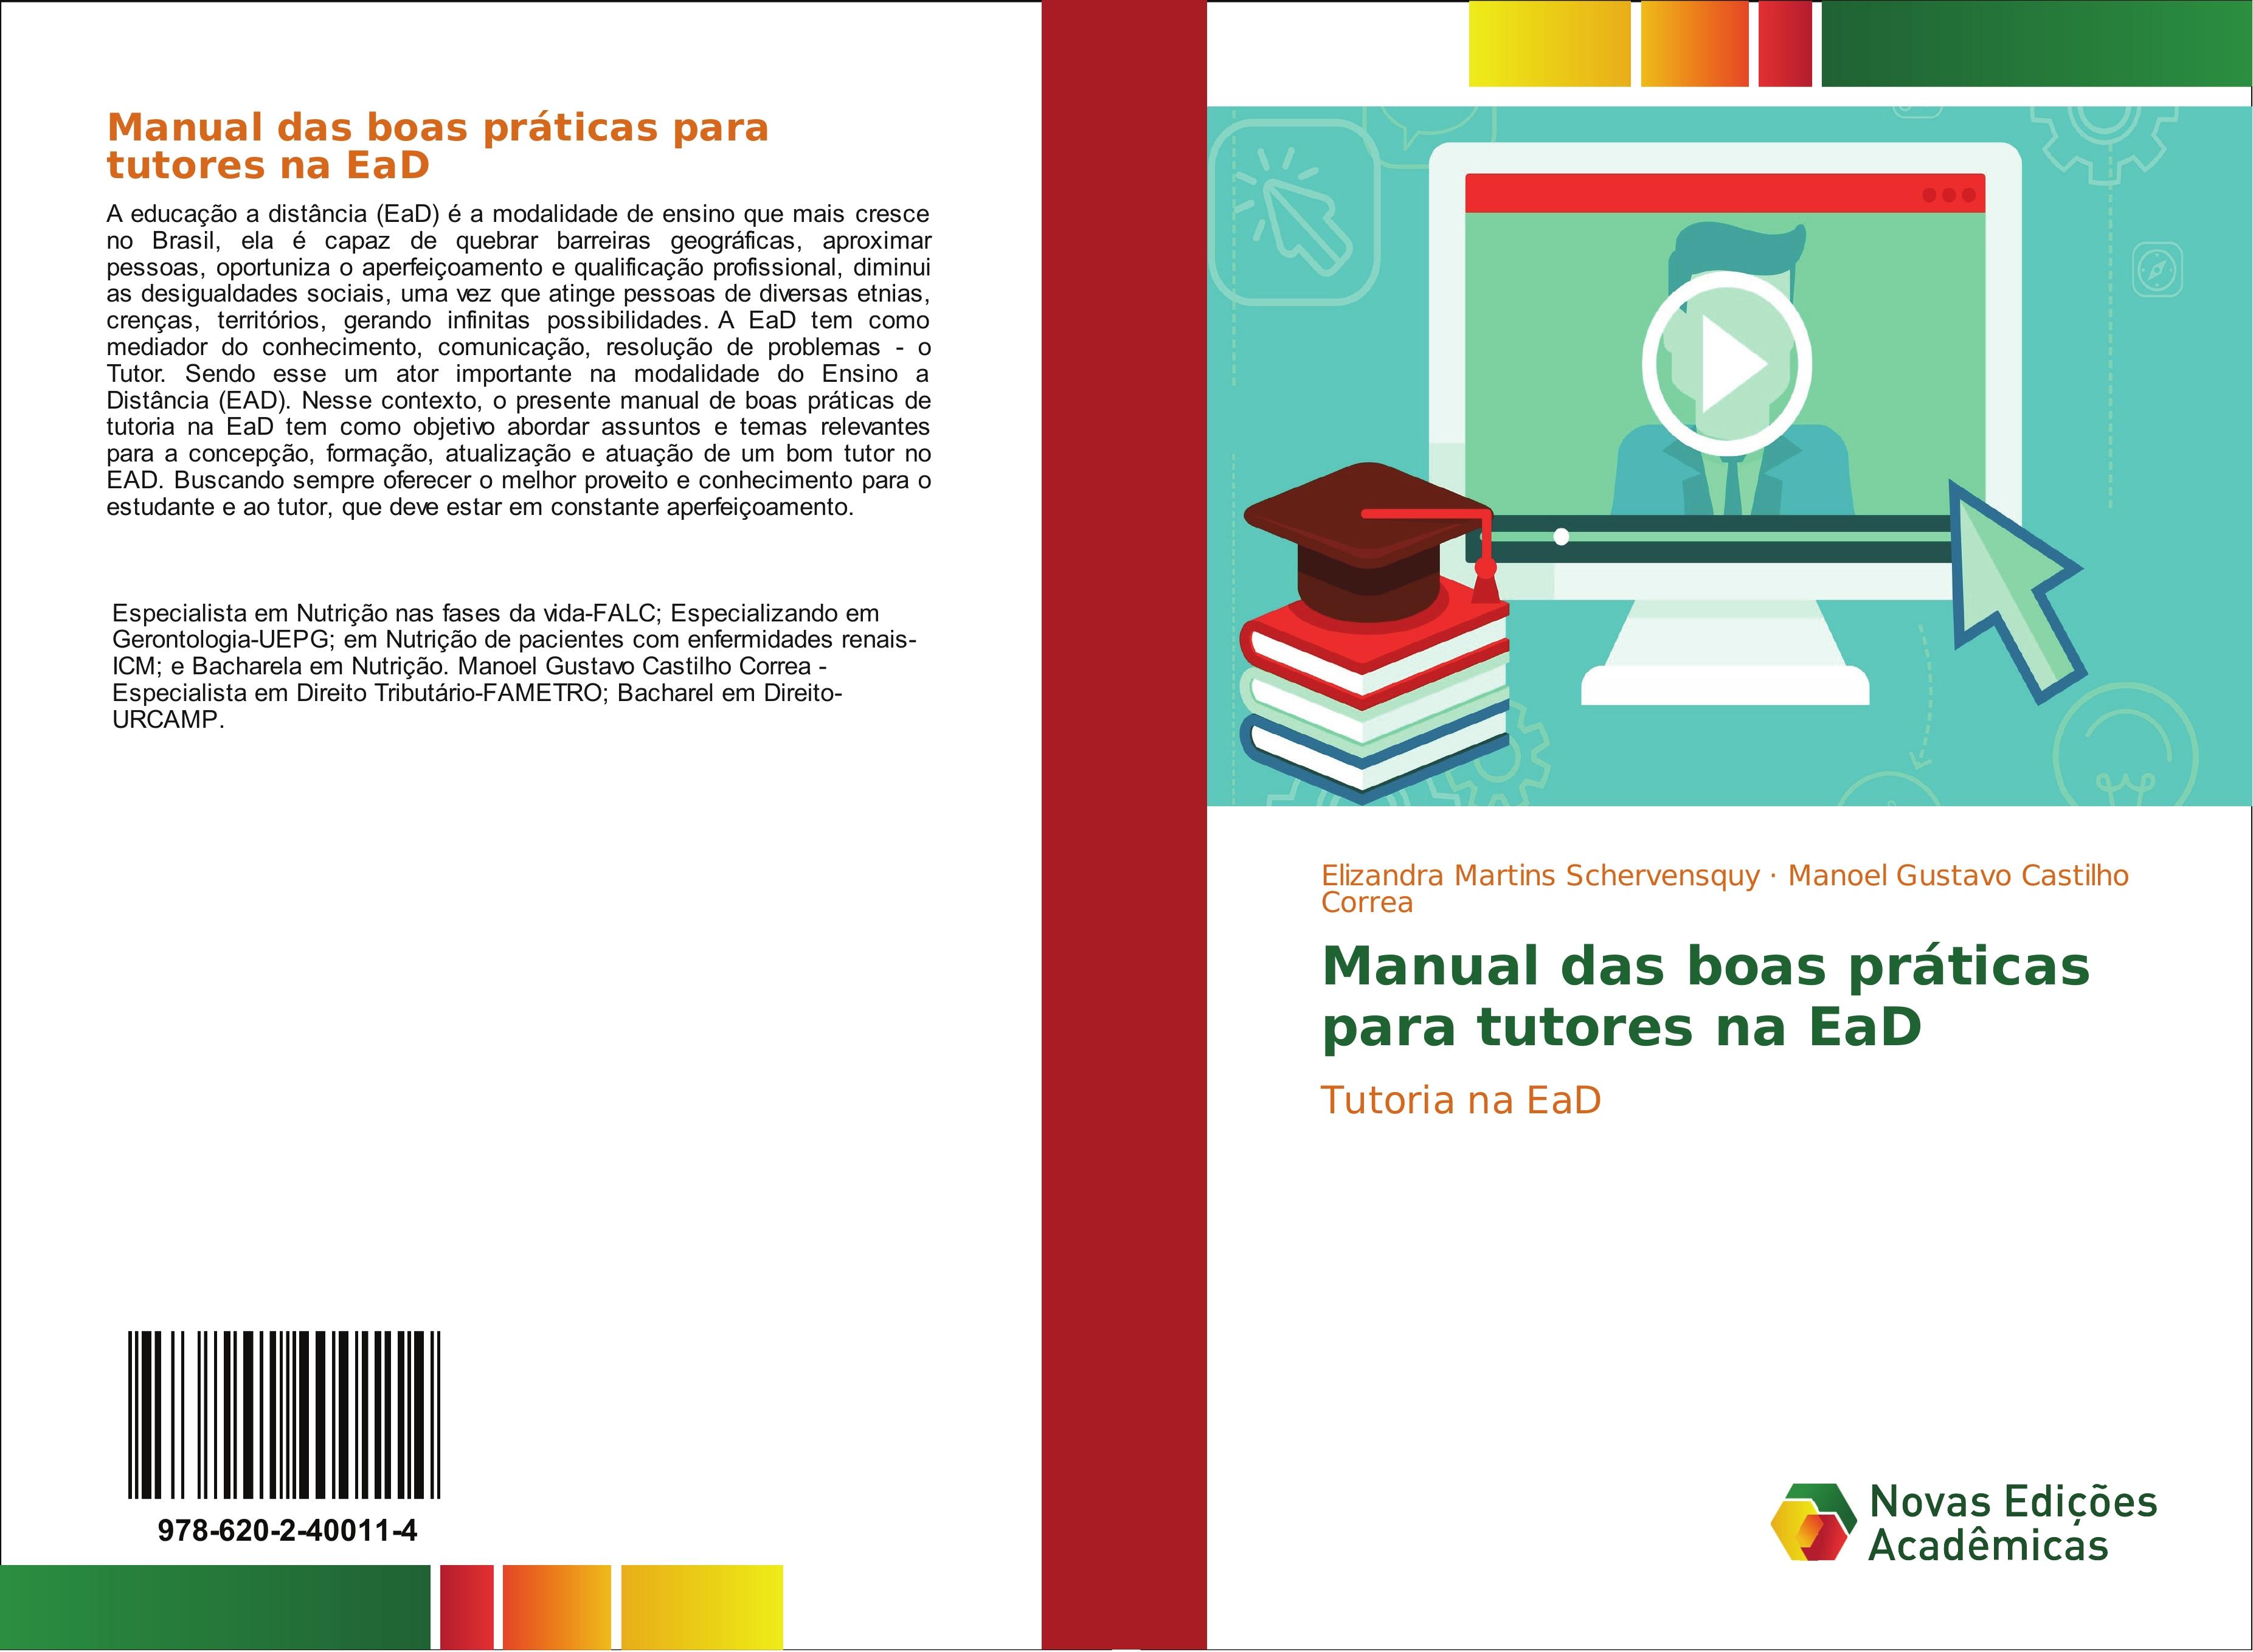 Manual das boas práticas para tutores na EaD - Elizandra Martins Schervensquy|Manoel Gustavo Castilho Correa